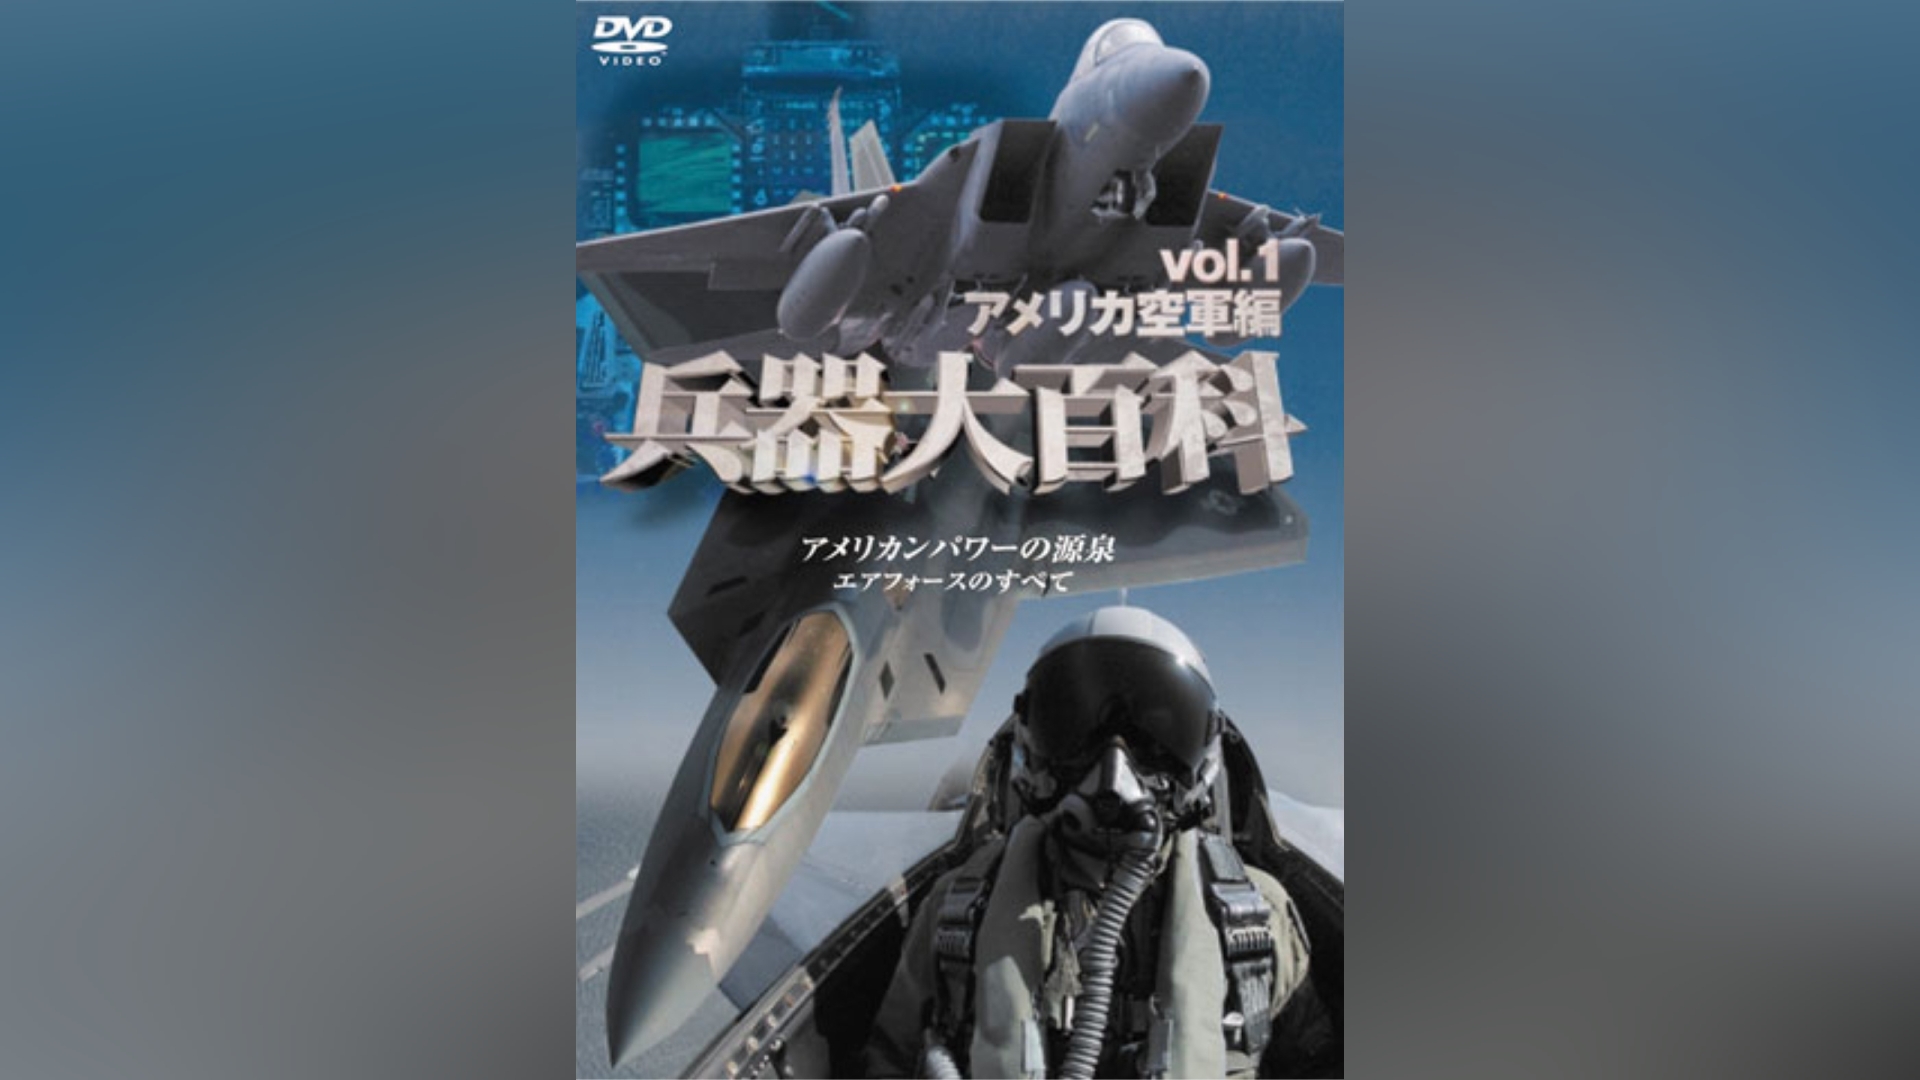 DVD 兵器大百科 10 アメリカ海軍戦略兵器編